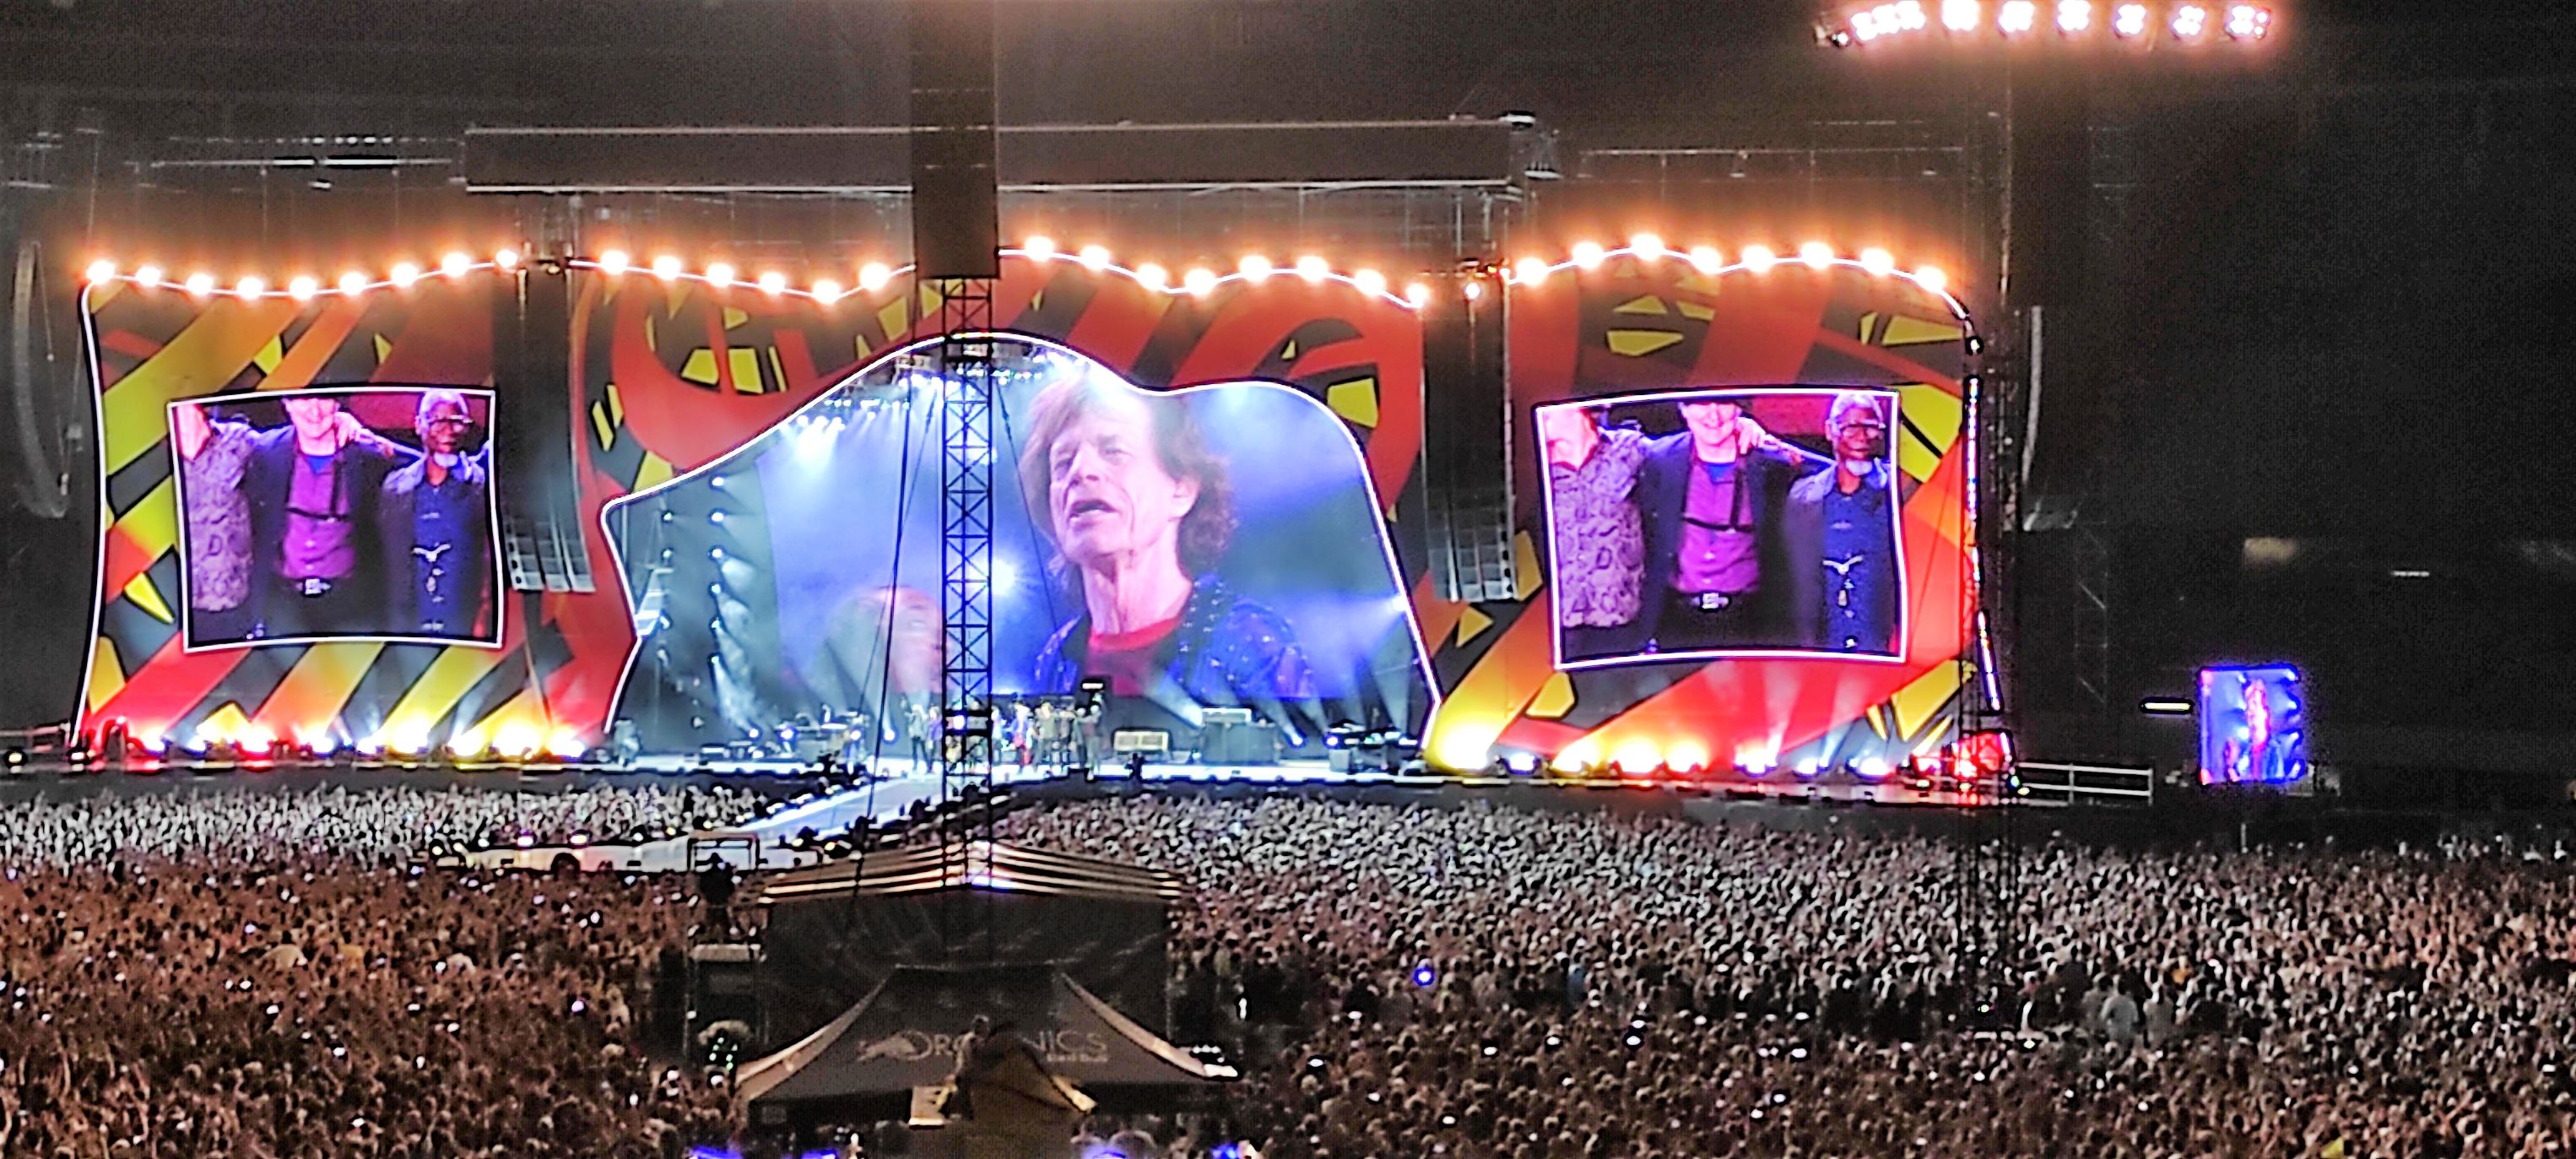 Fergeteges Rolling Stones koncert Bécsben